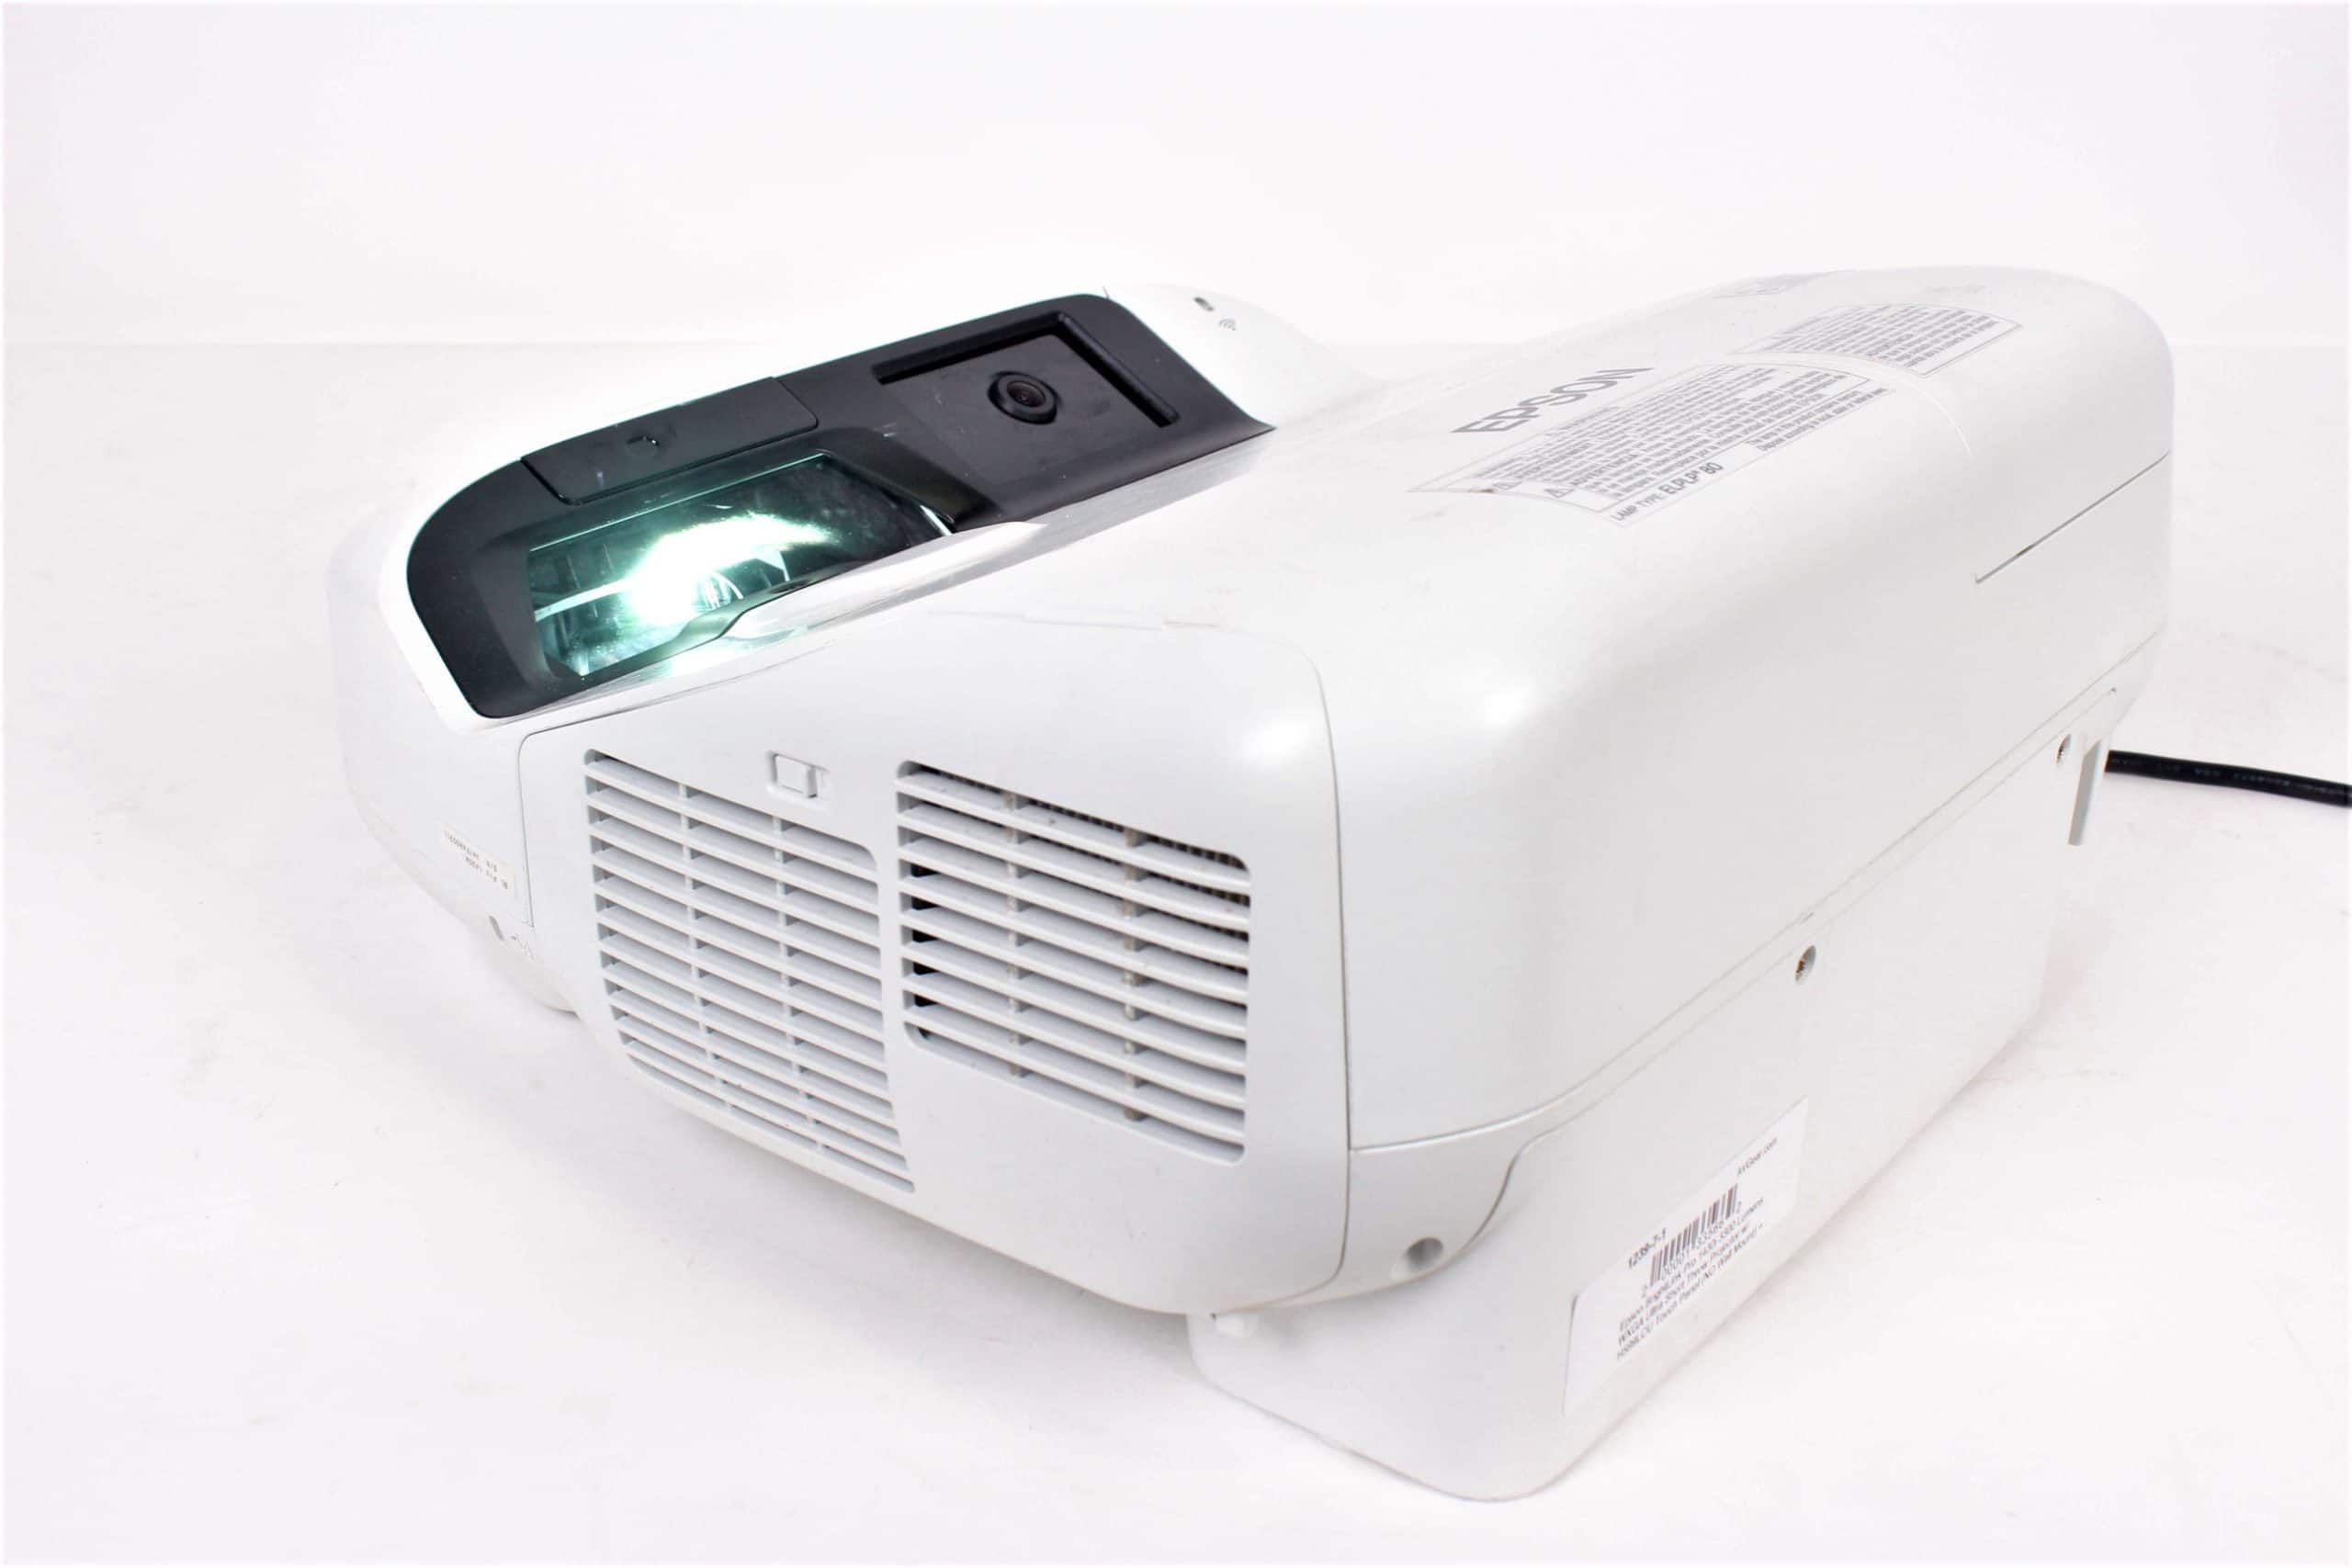 GK-3200W hot sale long throw laser projector with energy saving mode WXGA  standard resolution - AliExpress